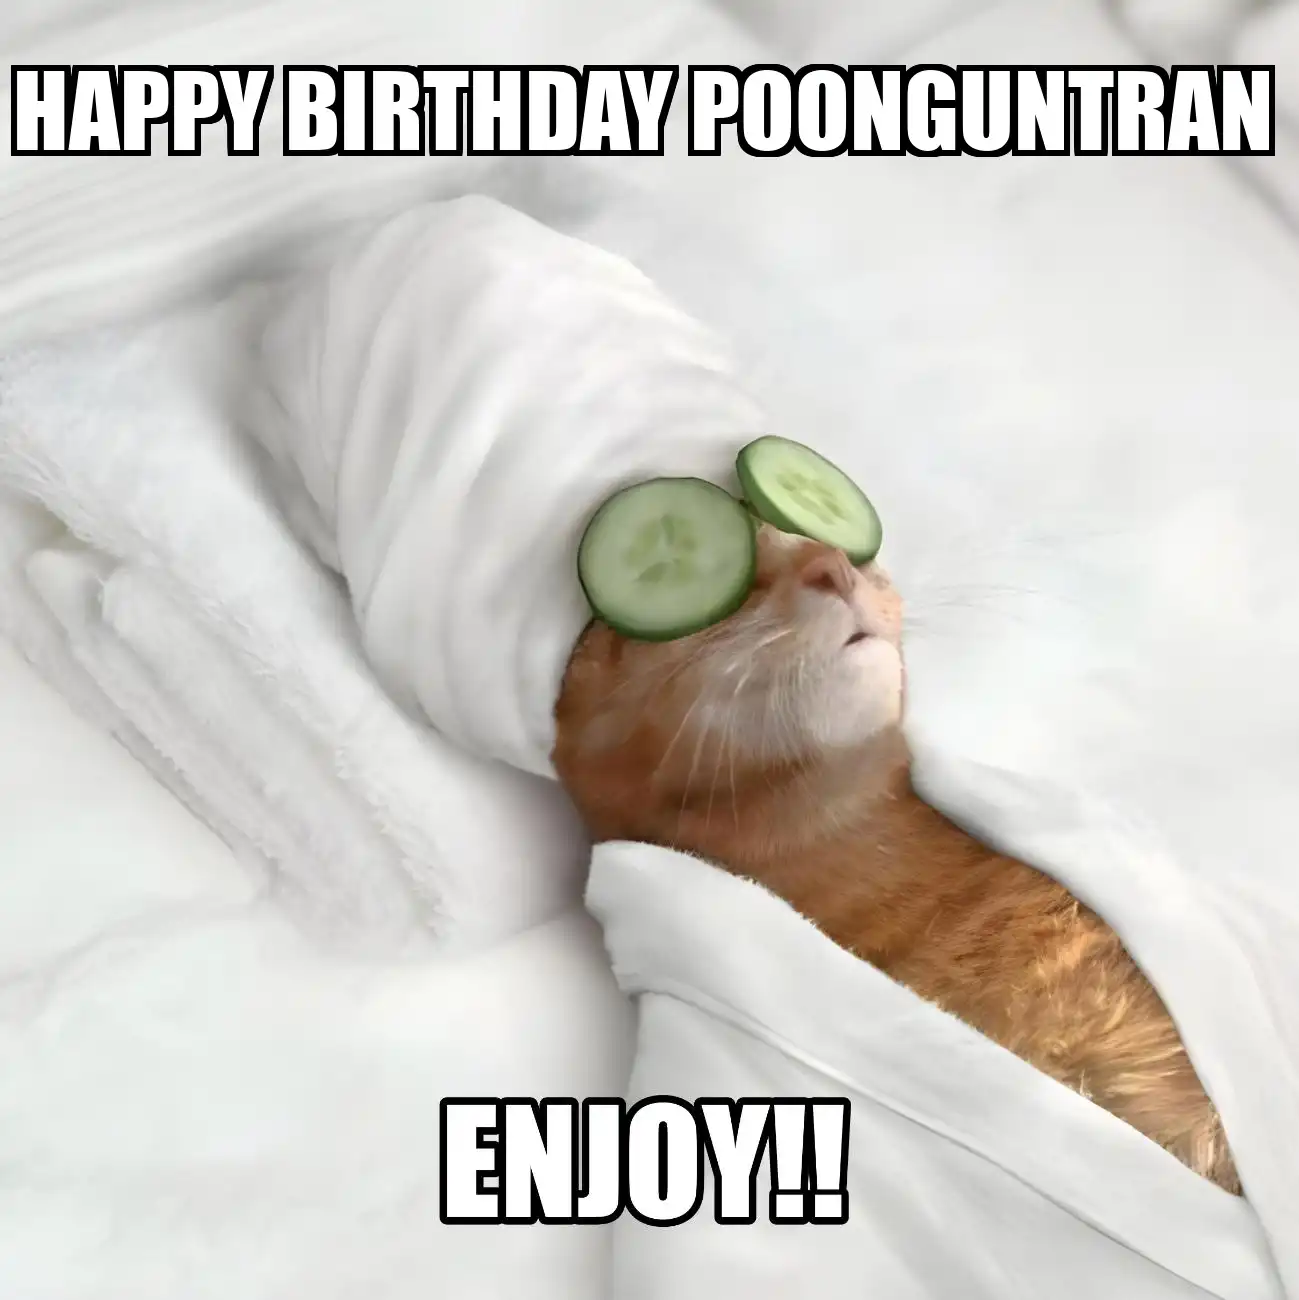 Happy Birthday Poonguntran Enjoy Cat Meme